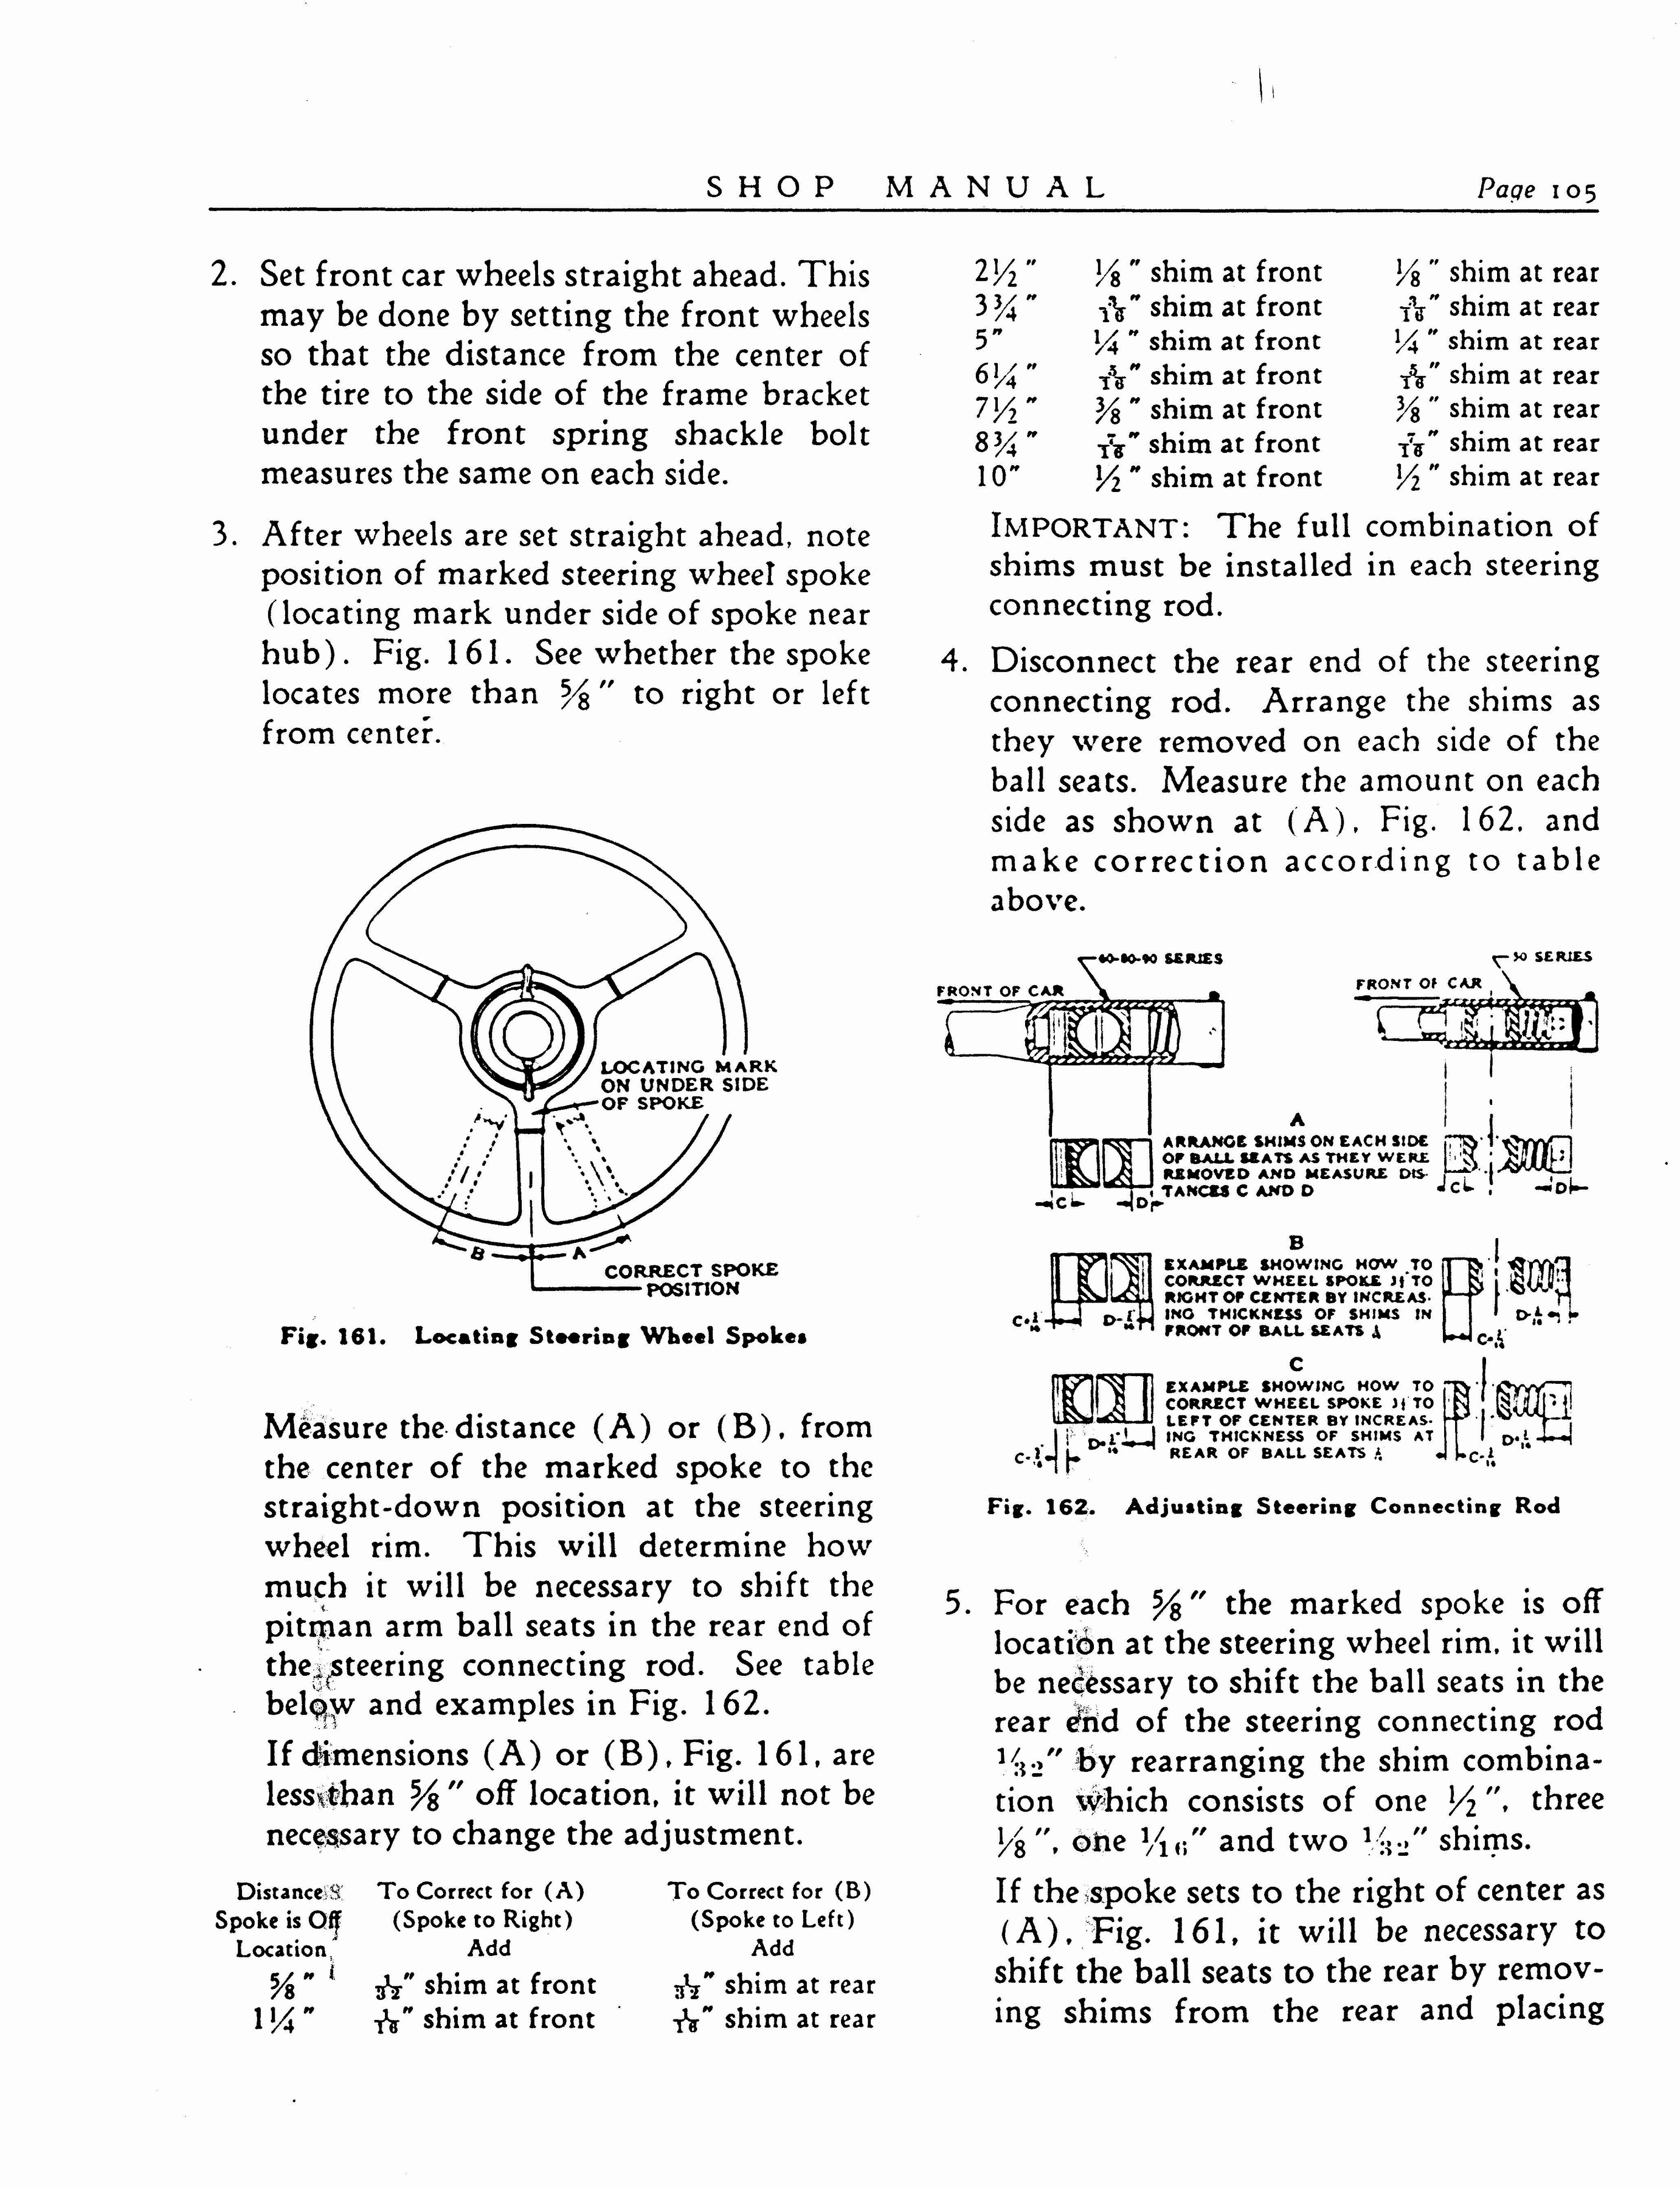 n_1933 Buick Shop Manual_Page_106.jpg